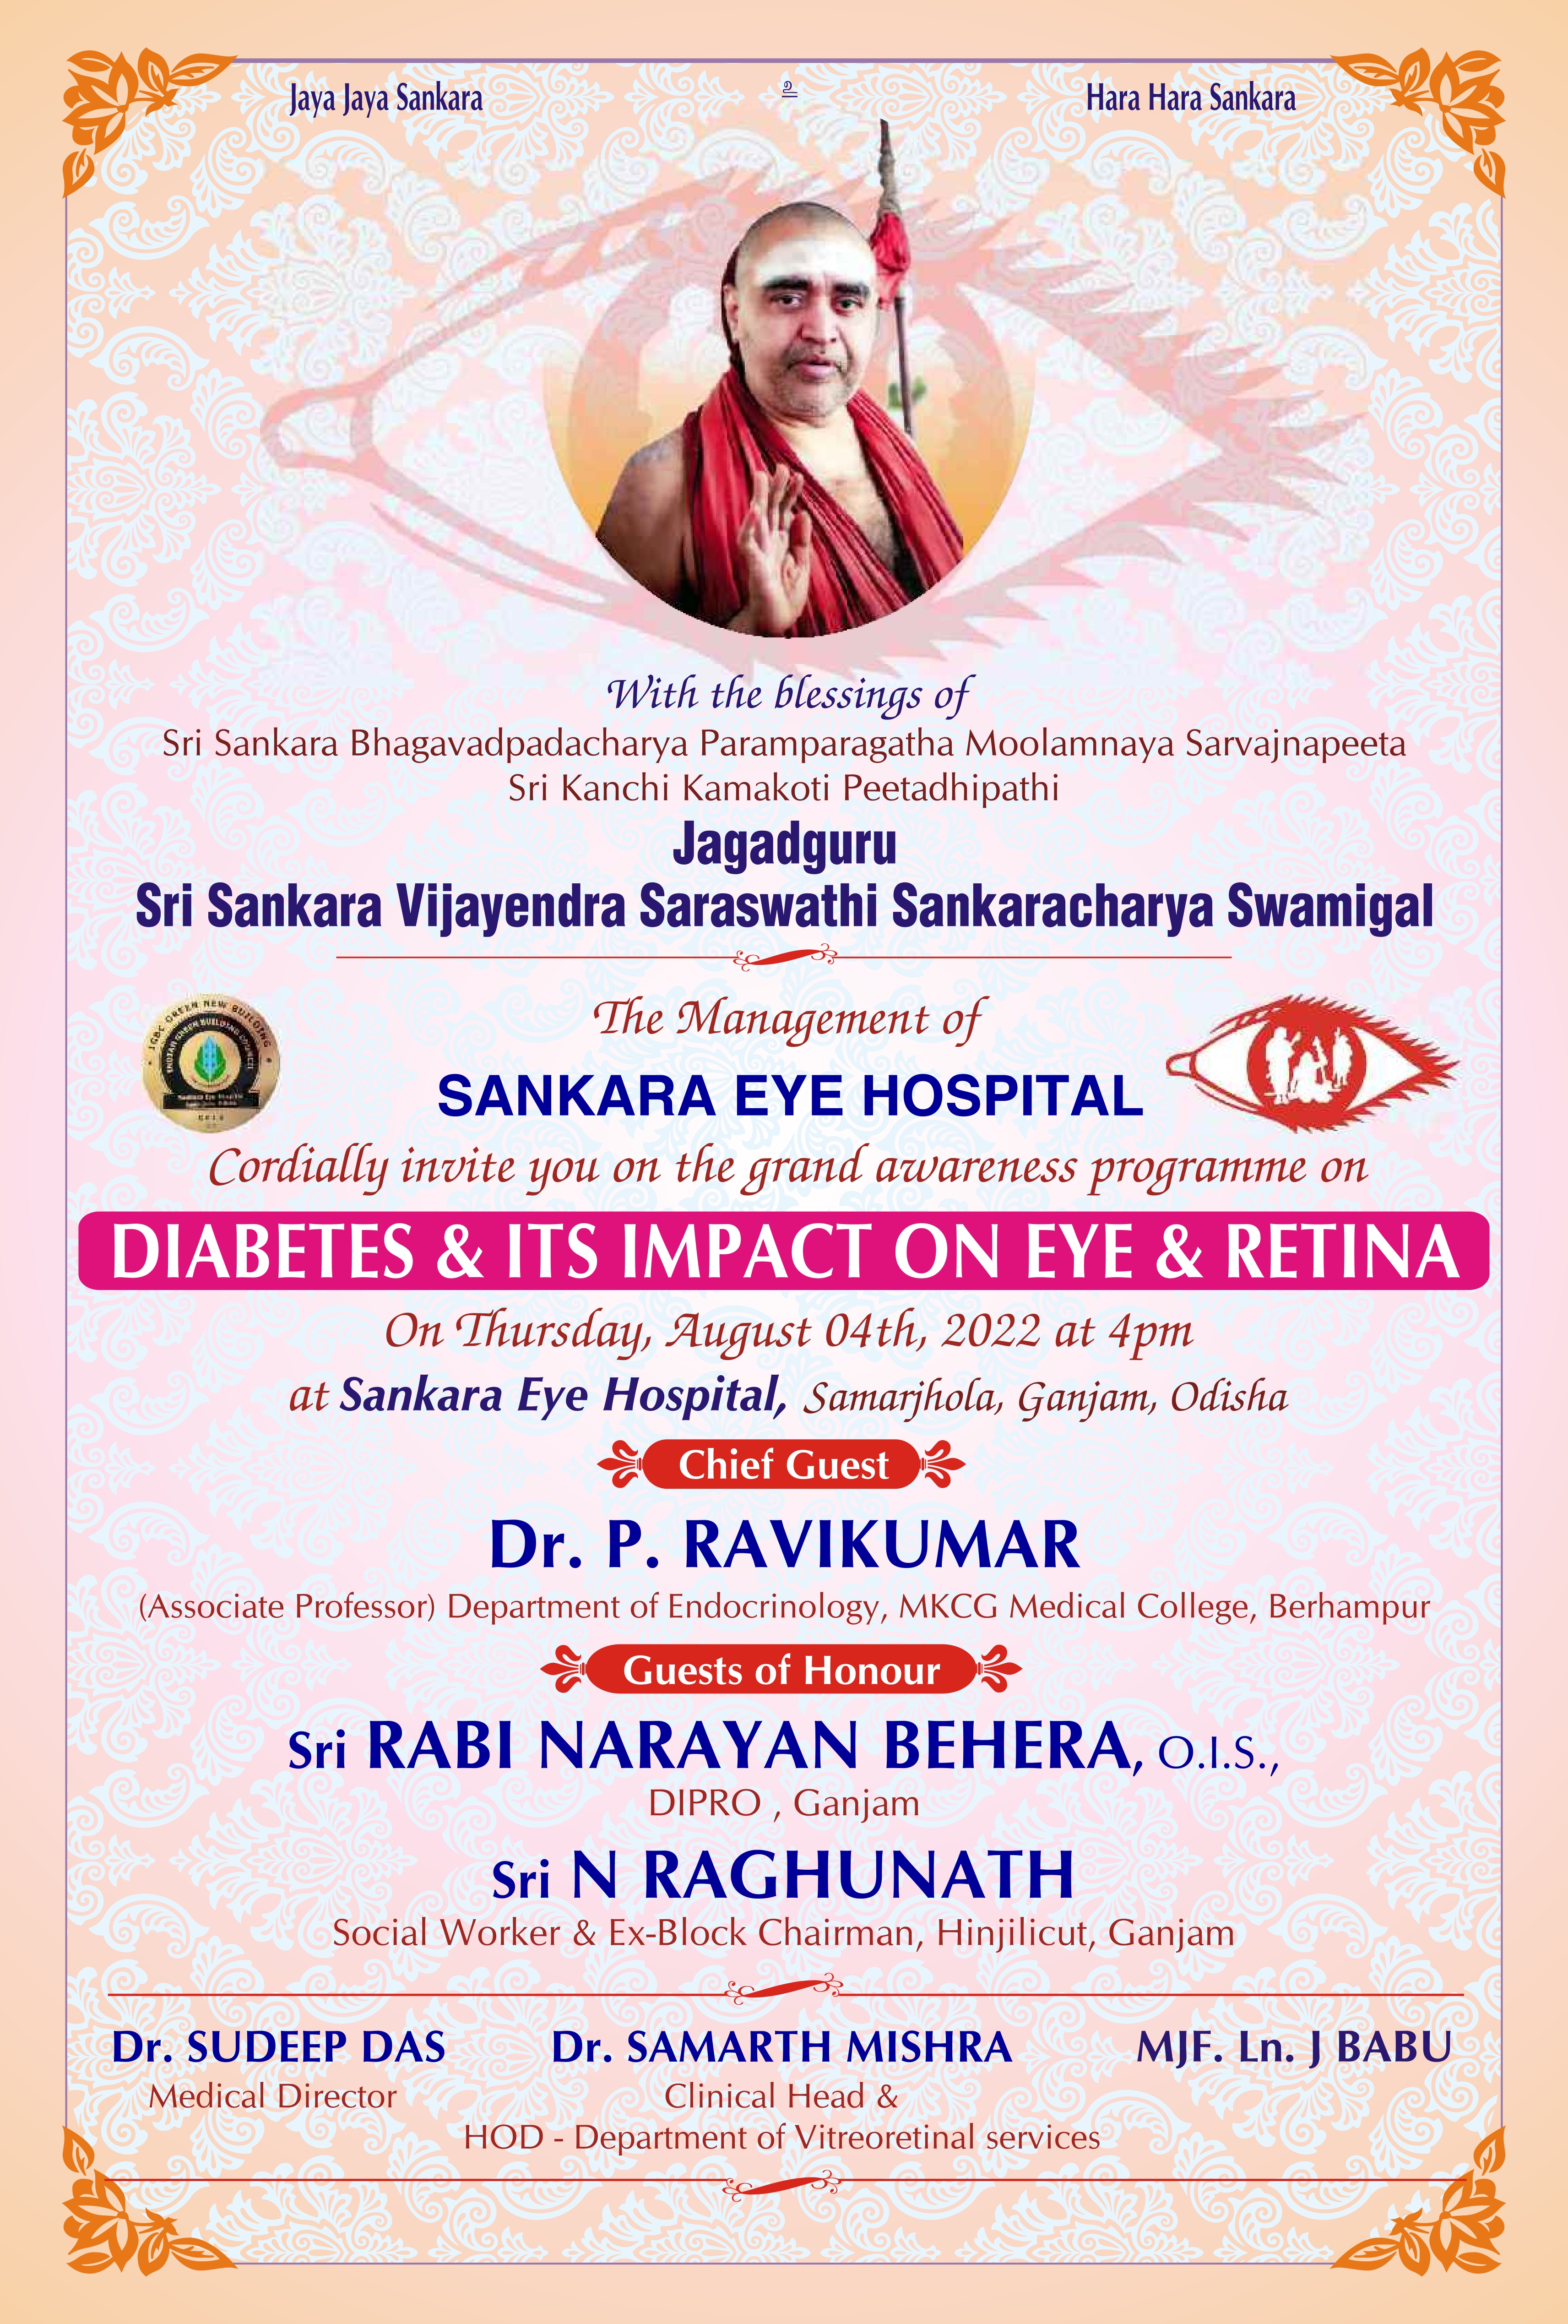 Sankara Eye Hospital Odisha - Awareness on diabetes and impact on retina